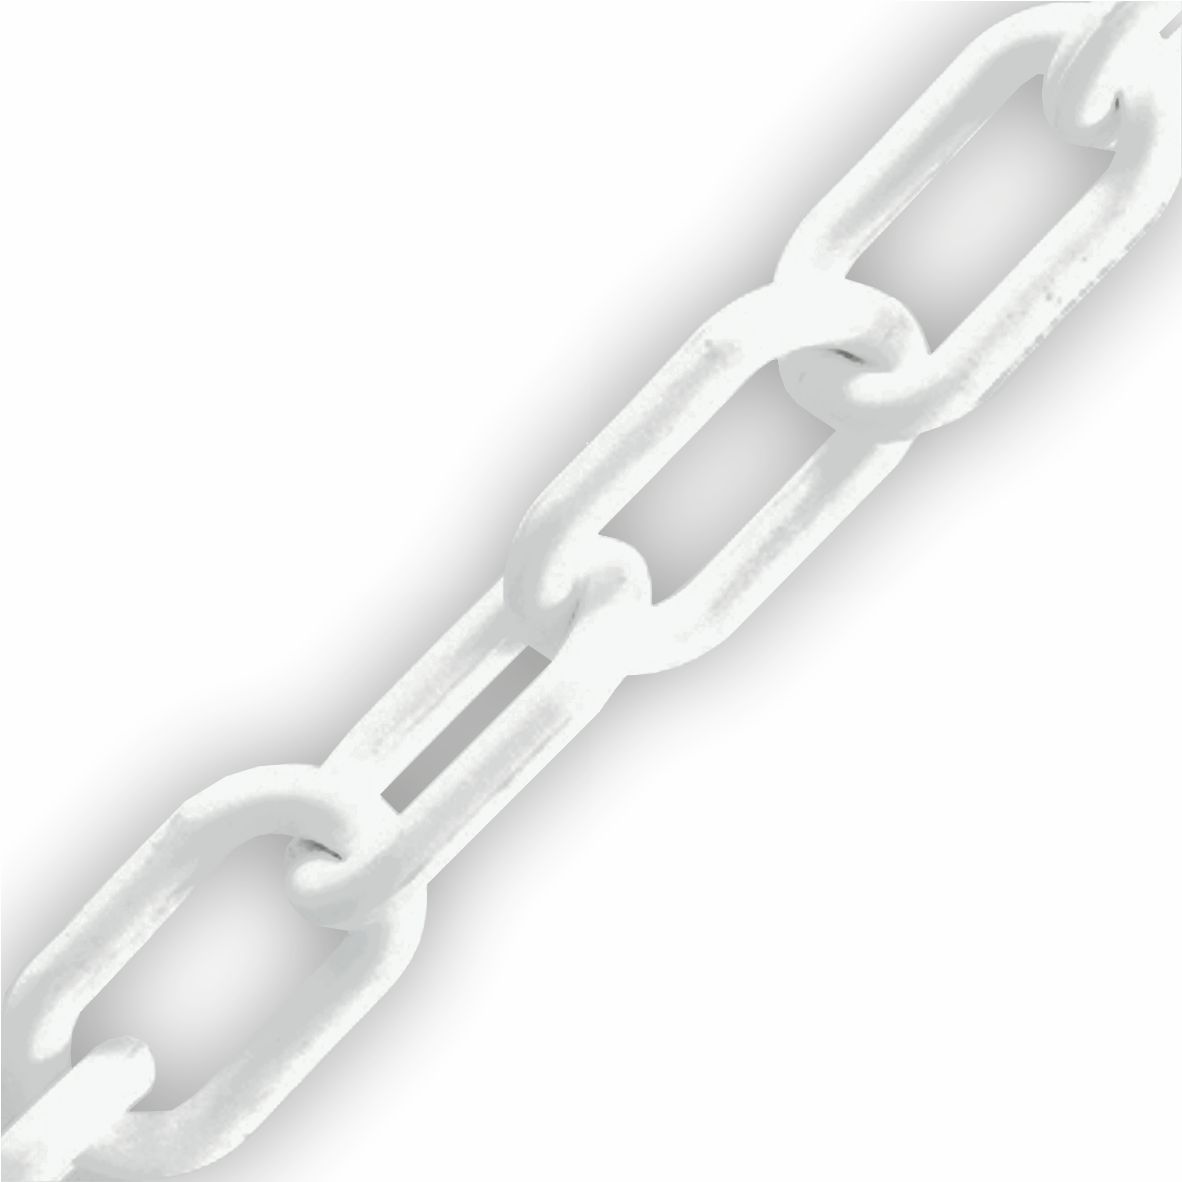 6mm Plastic Chain | Chunky Jewelry & Accessory Making (White / 2pcs x 38cm)